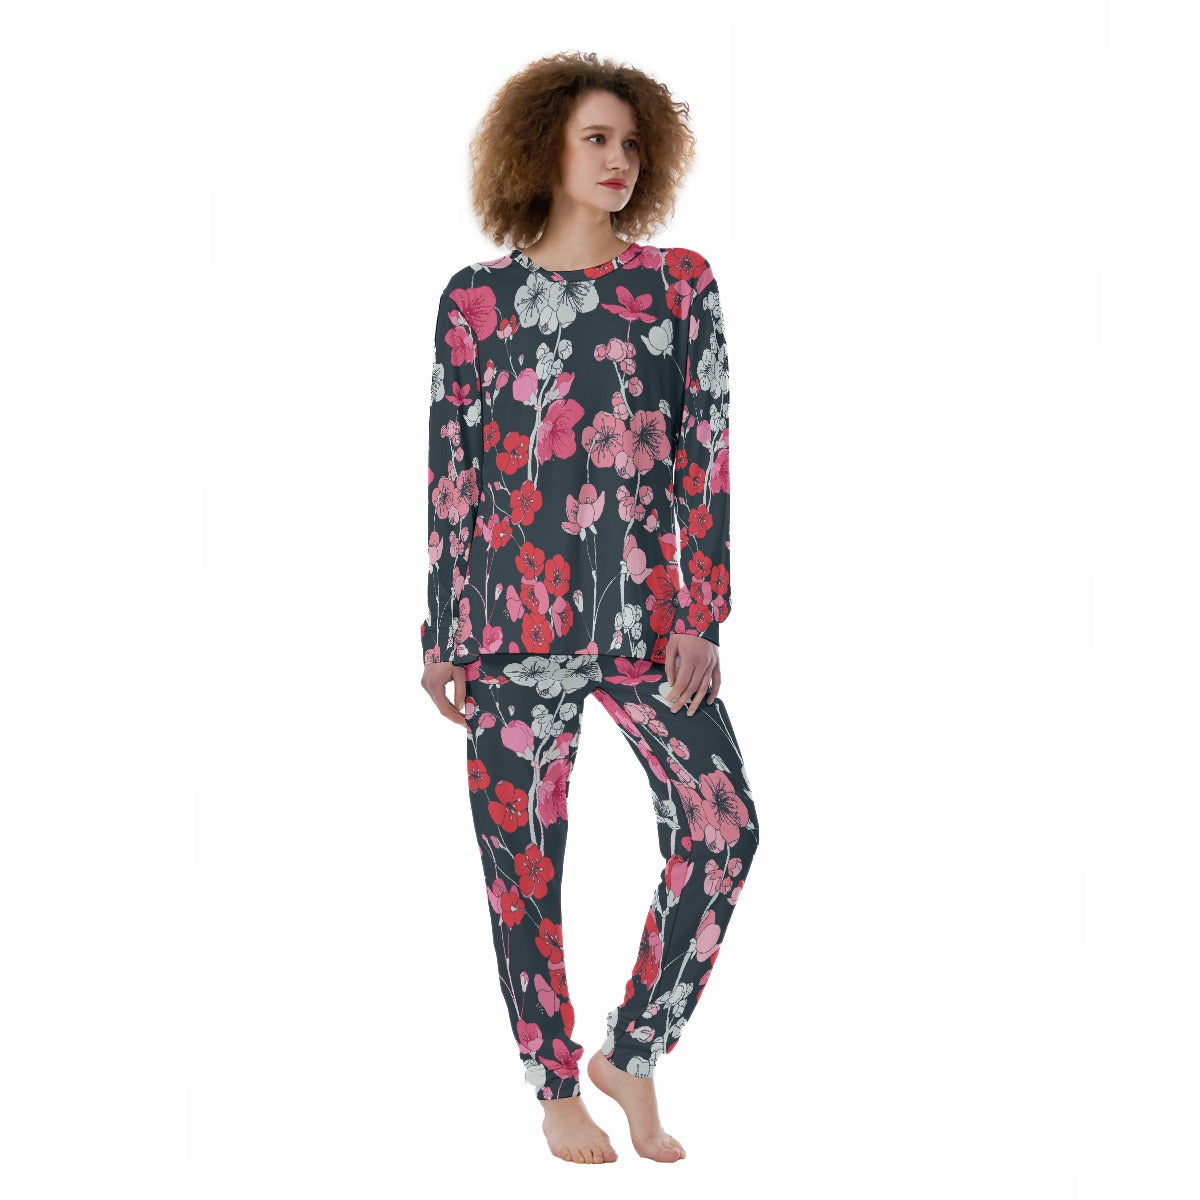 Majenta Floral All-Over Print Women's Pajamas